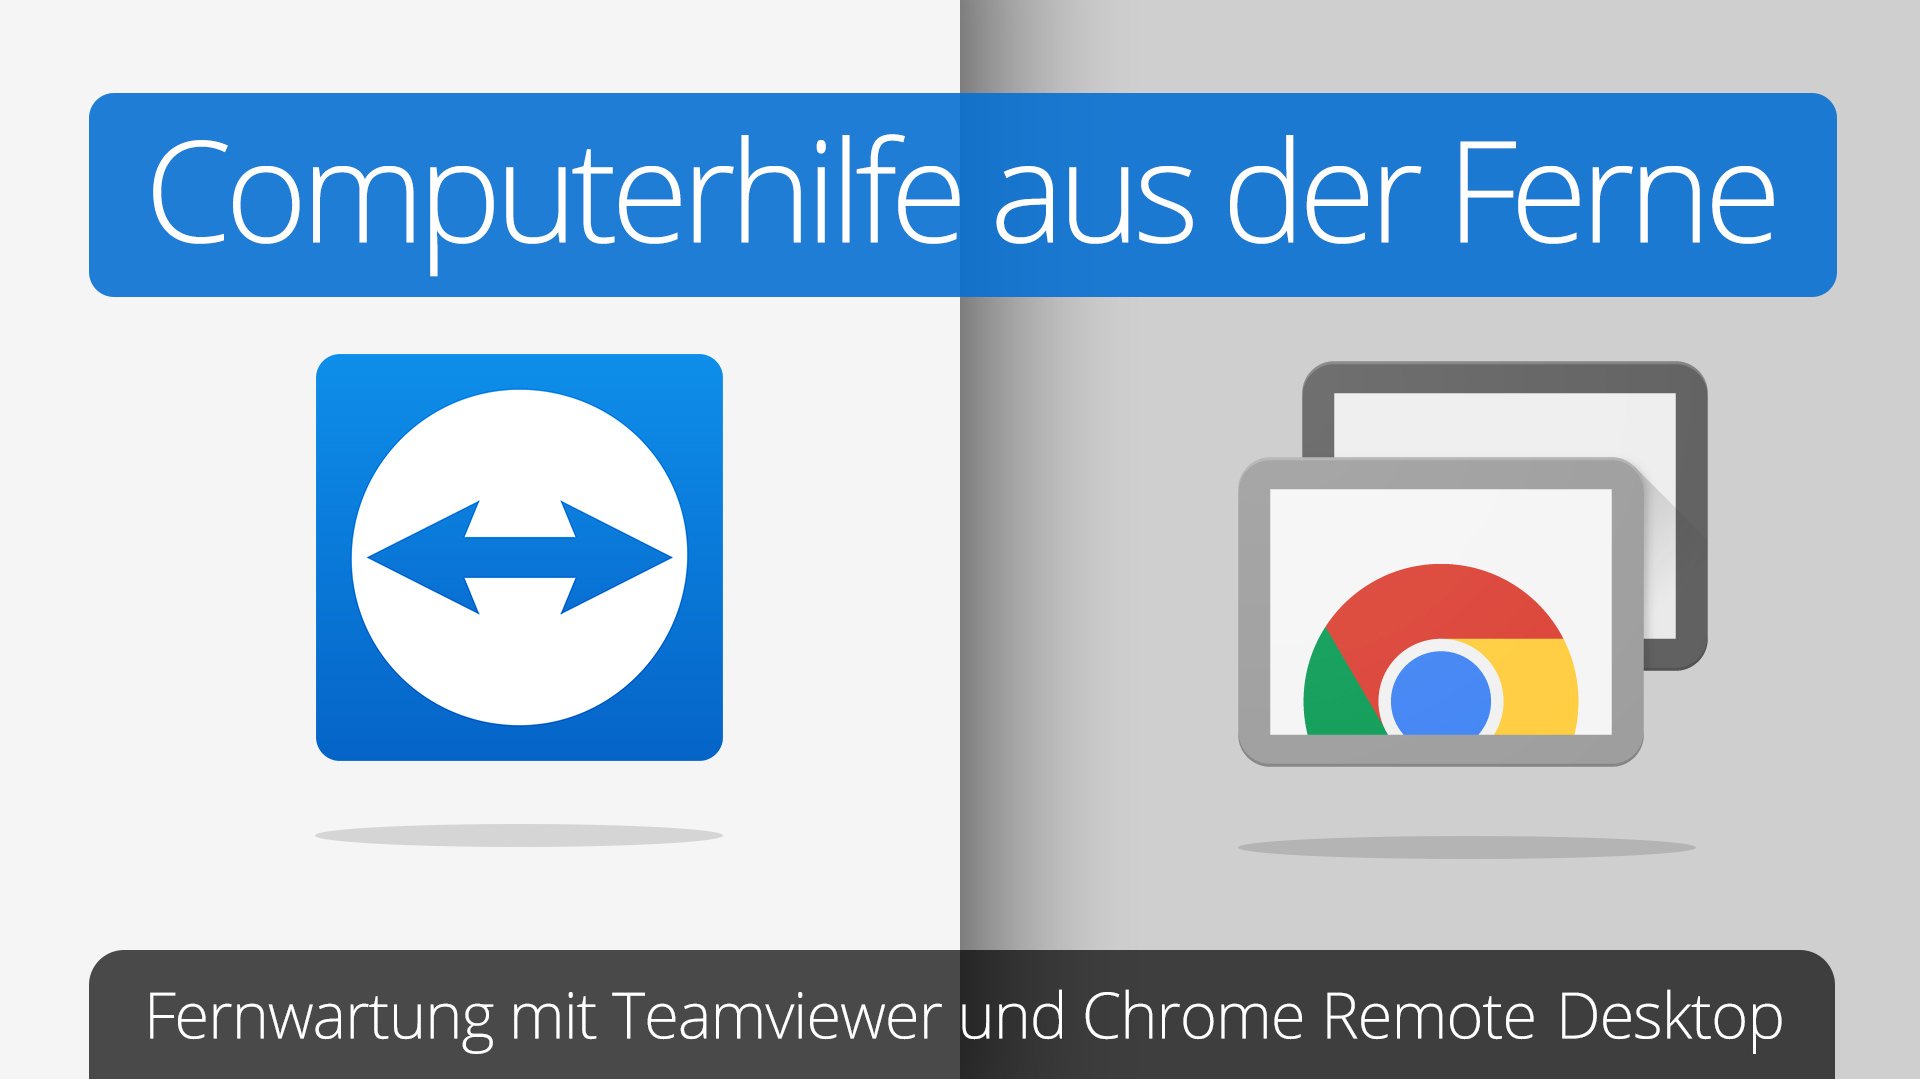 google chrome remote desktop vs teamviewer